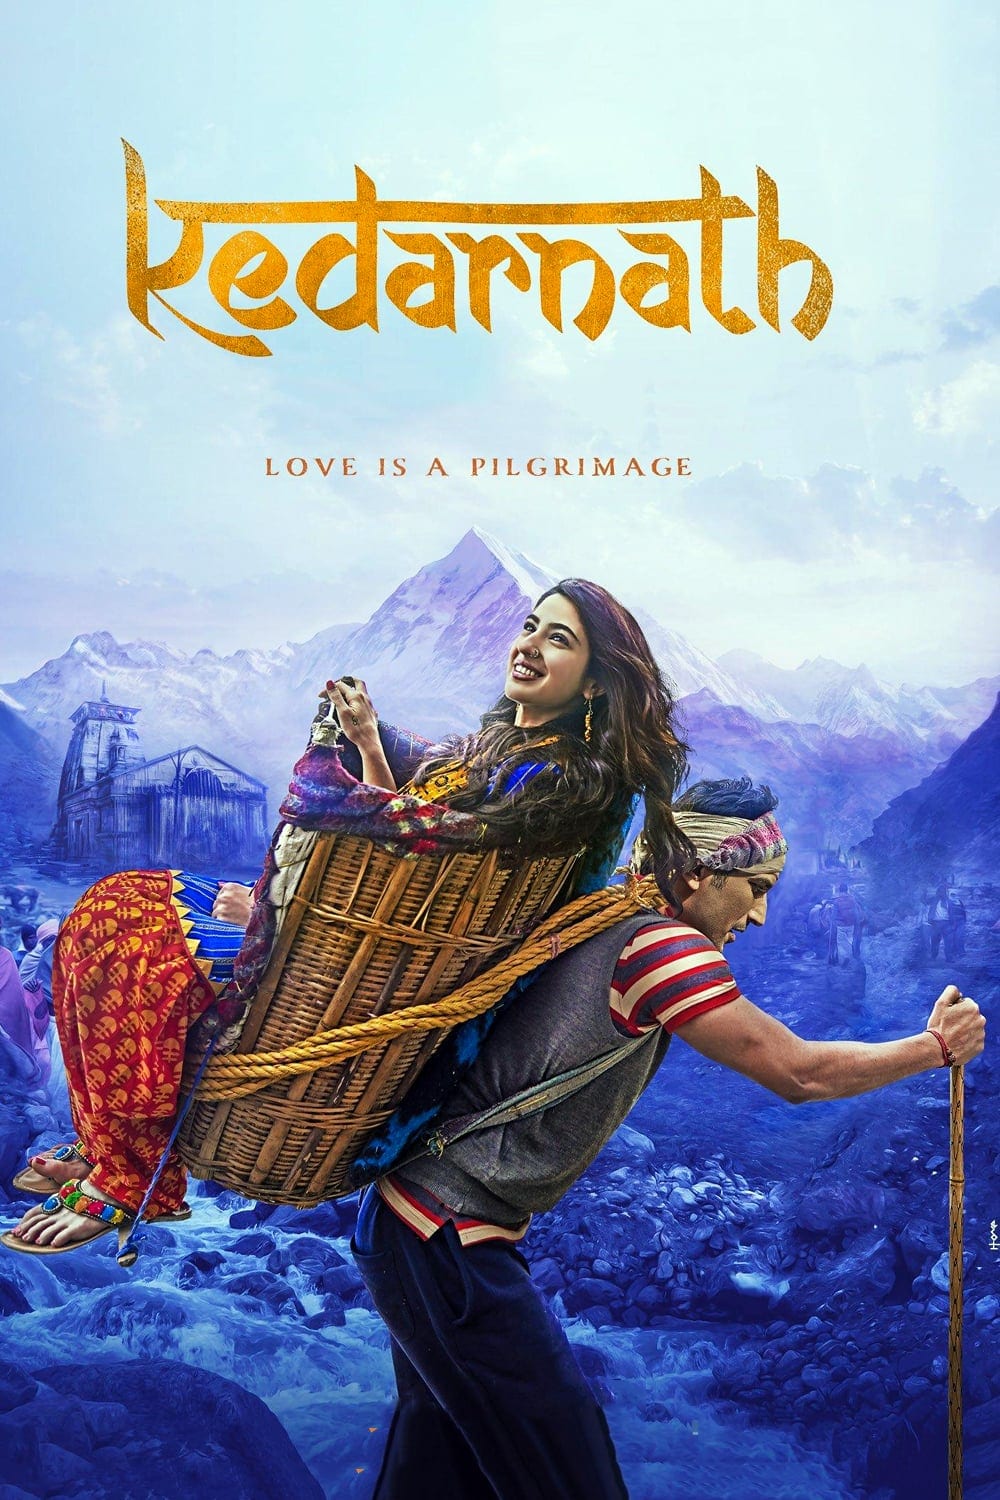 Poster for the movie "Kedarnath"